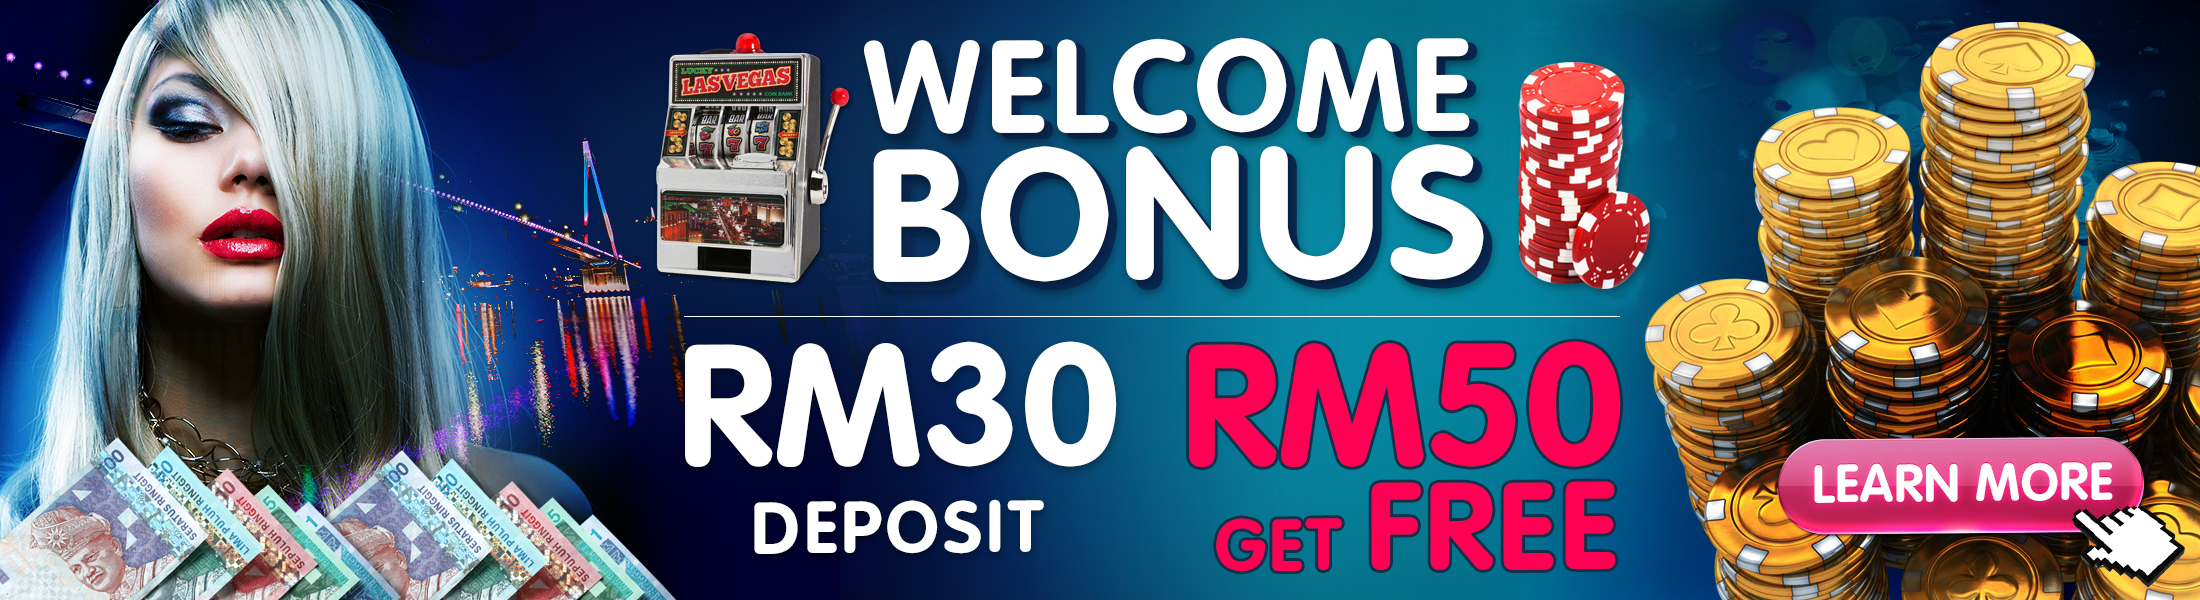 Deposit 30 Free 50 Promotion SKY3888 Top Up Bonus!